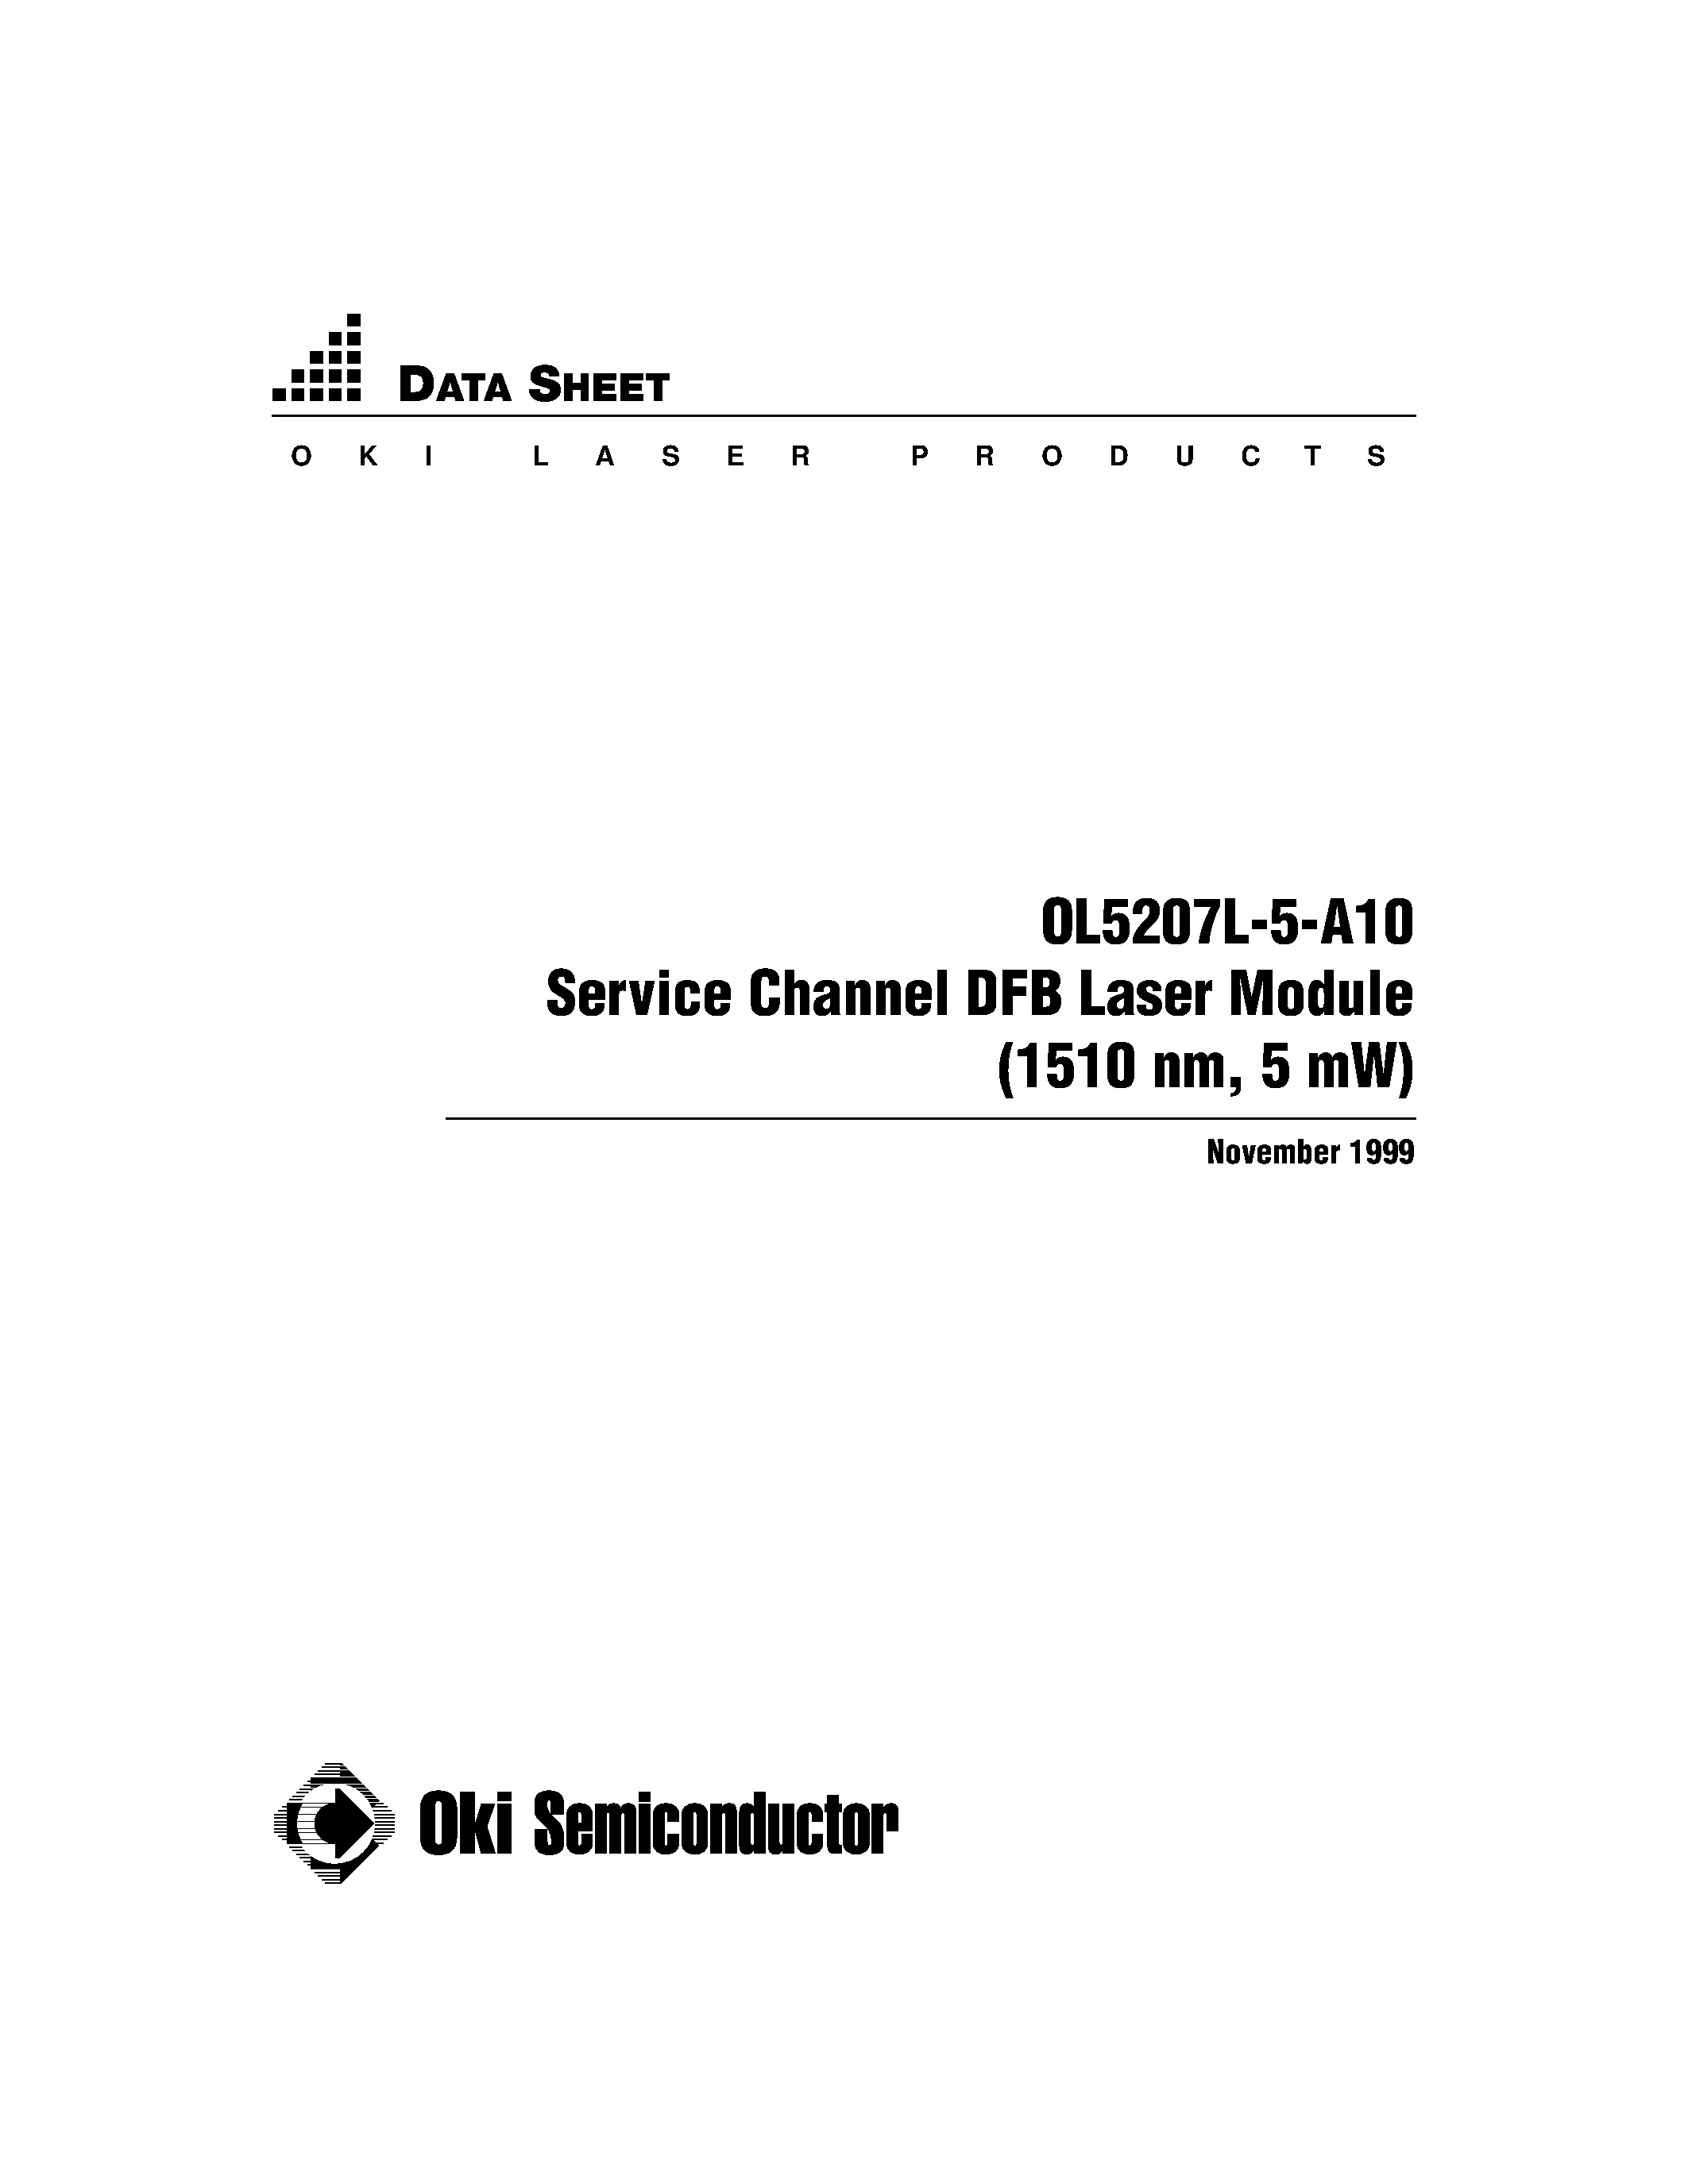 Datasheet OL5207L-5-A10 - Service Channel DFB Laser Module (1510 nm / 5 mW) page 1